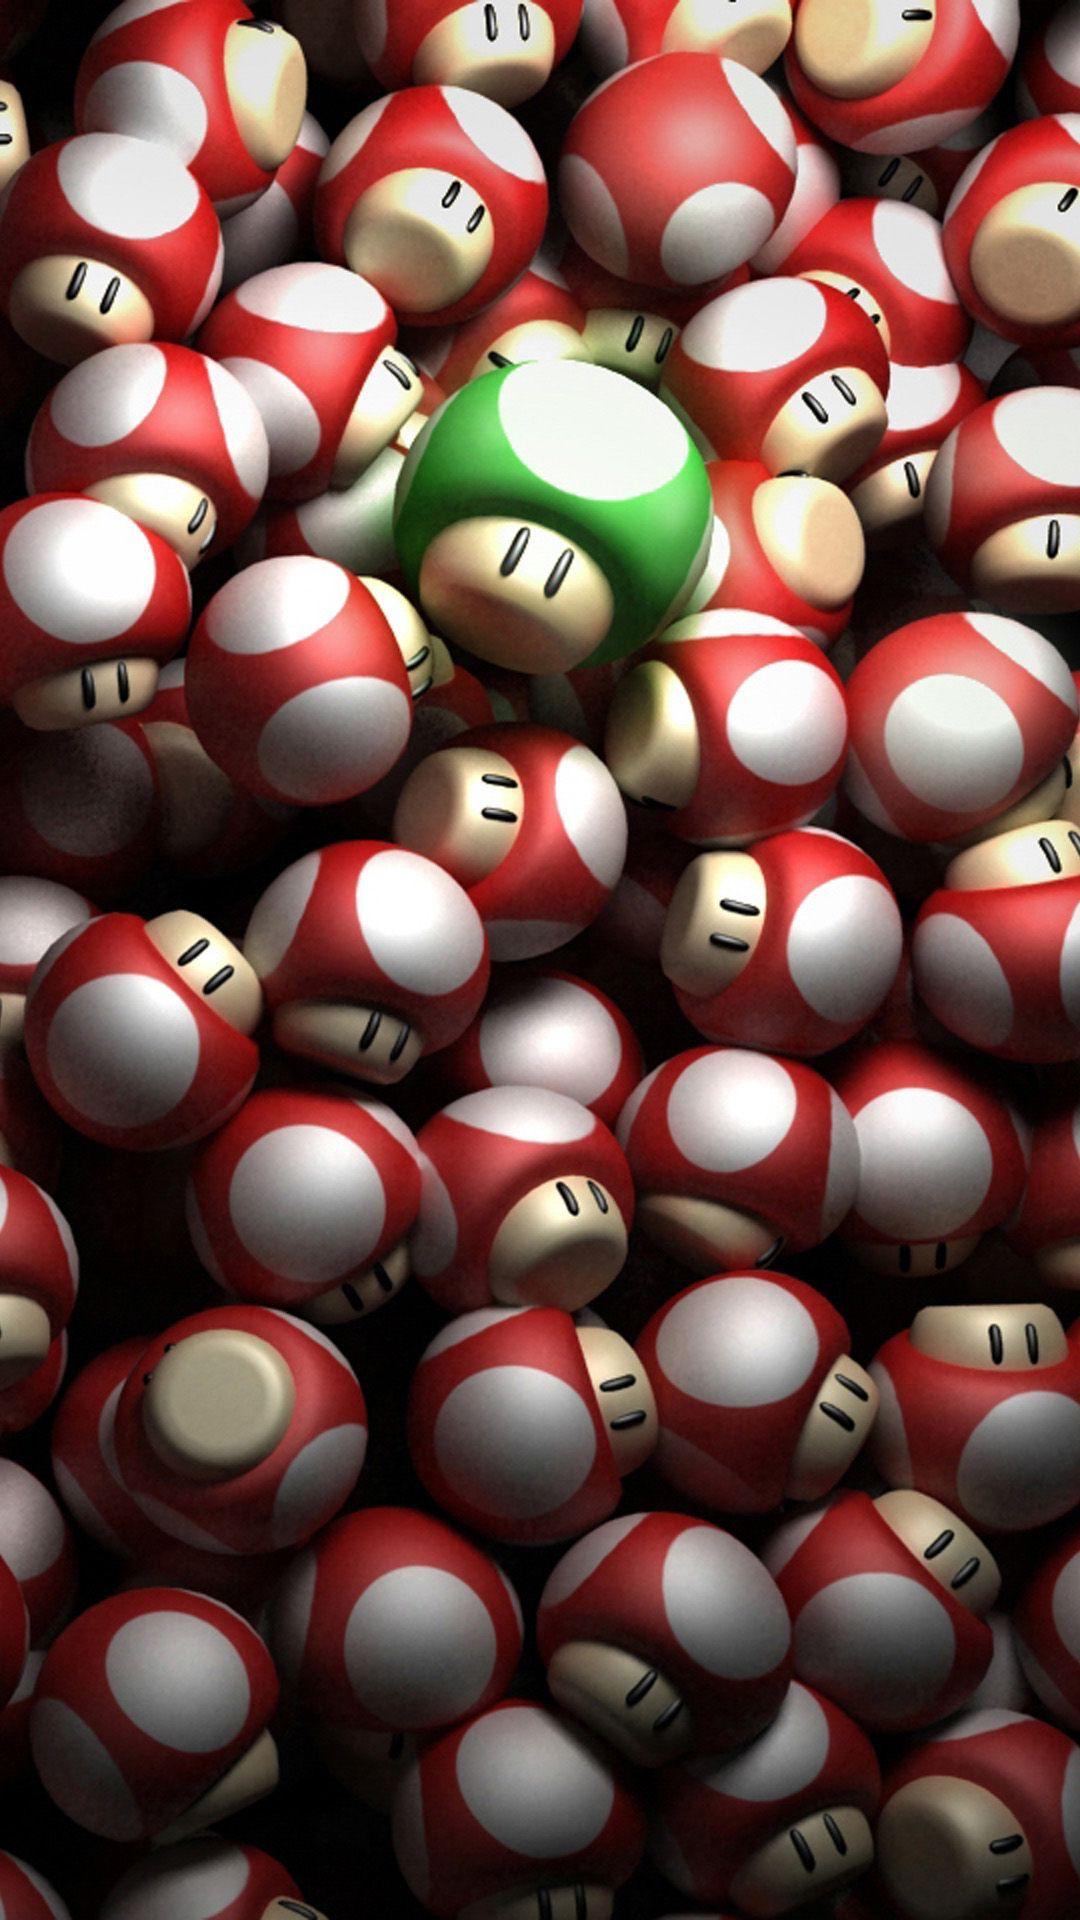 Hd Mario Mobile Wallpaper Mushrooms Red Green 1 JPEG Image